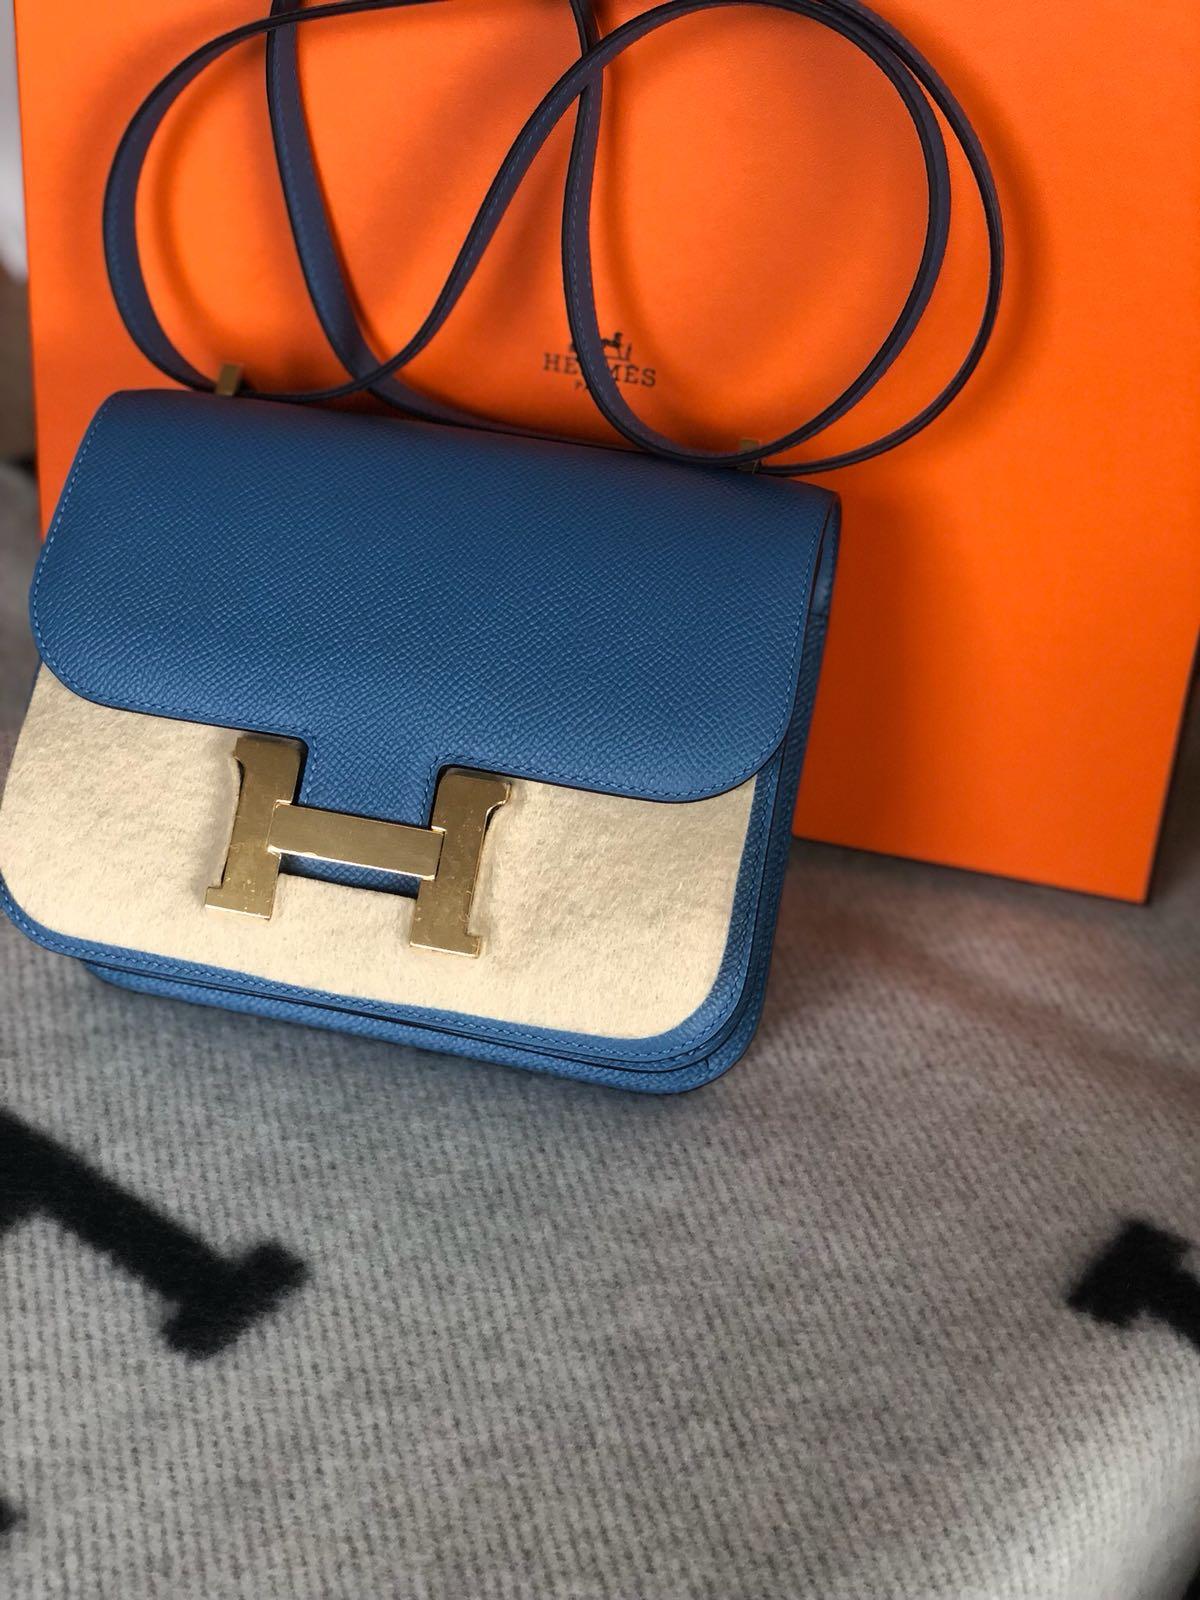 New never worn Hermes Bag
Constance
Size mini
Leather Epsom
Color Blue Azur
Gold hardware

Comes full set: 
Original box
Invoice
Raincoat
Padlock & Keys
Dustbag